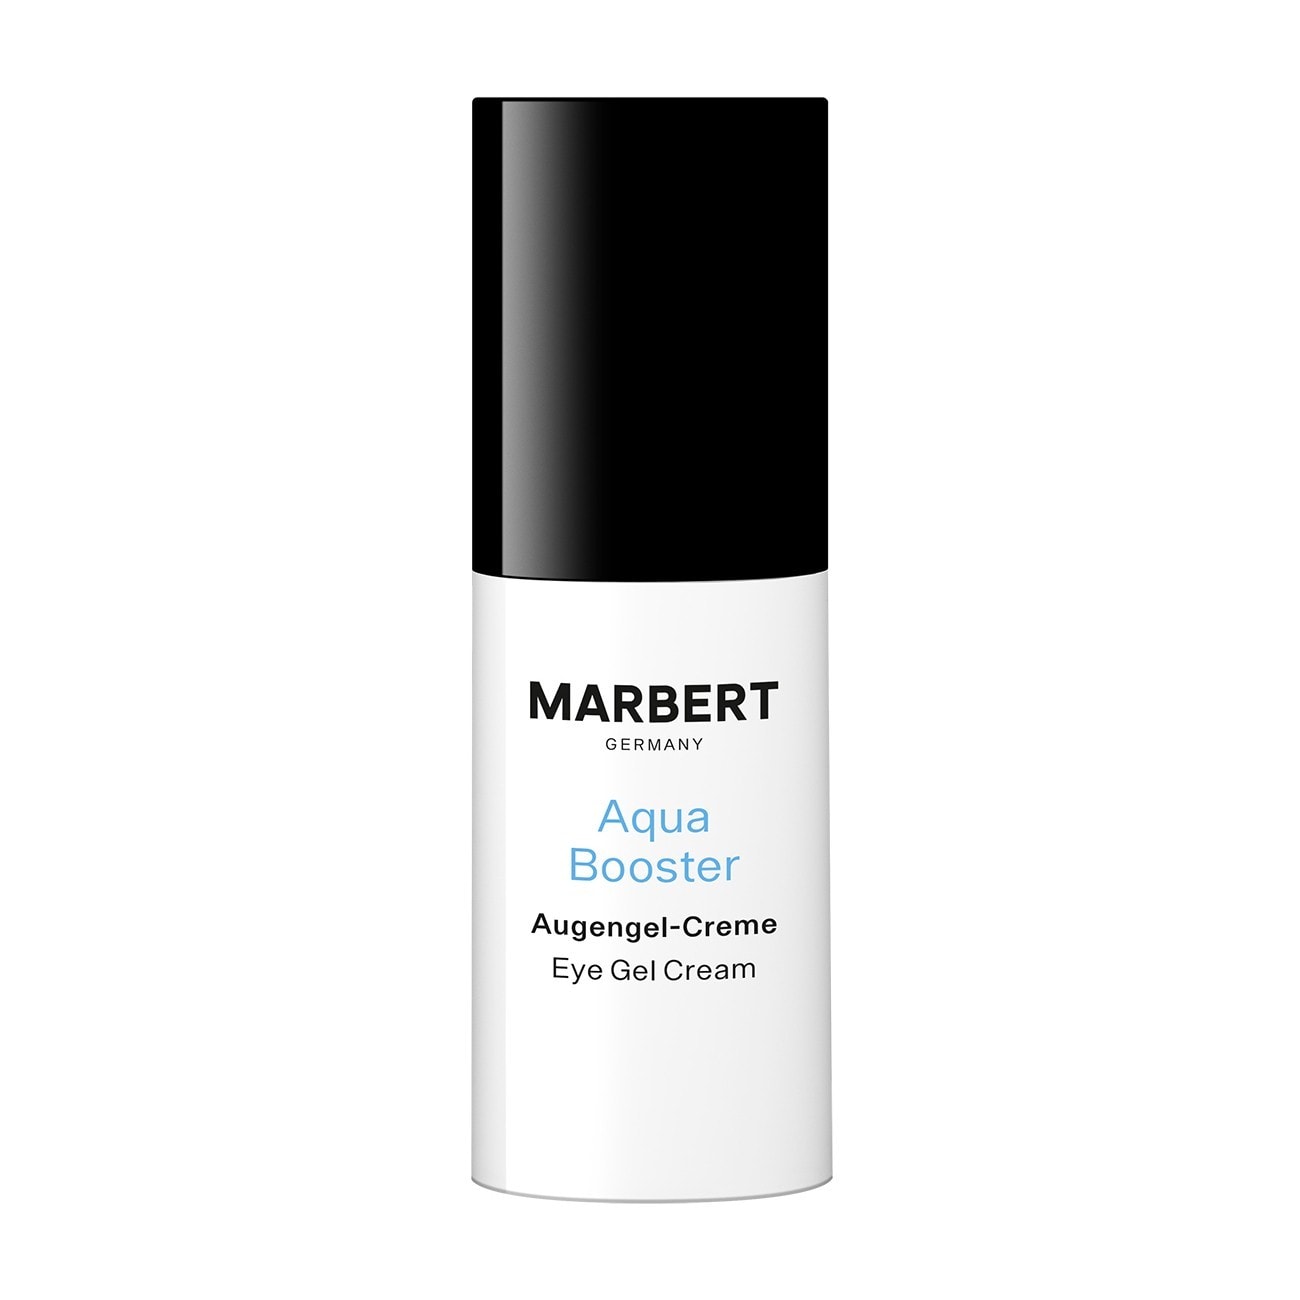 Marbert Aqua Booster Eye Gel Cream